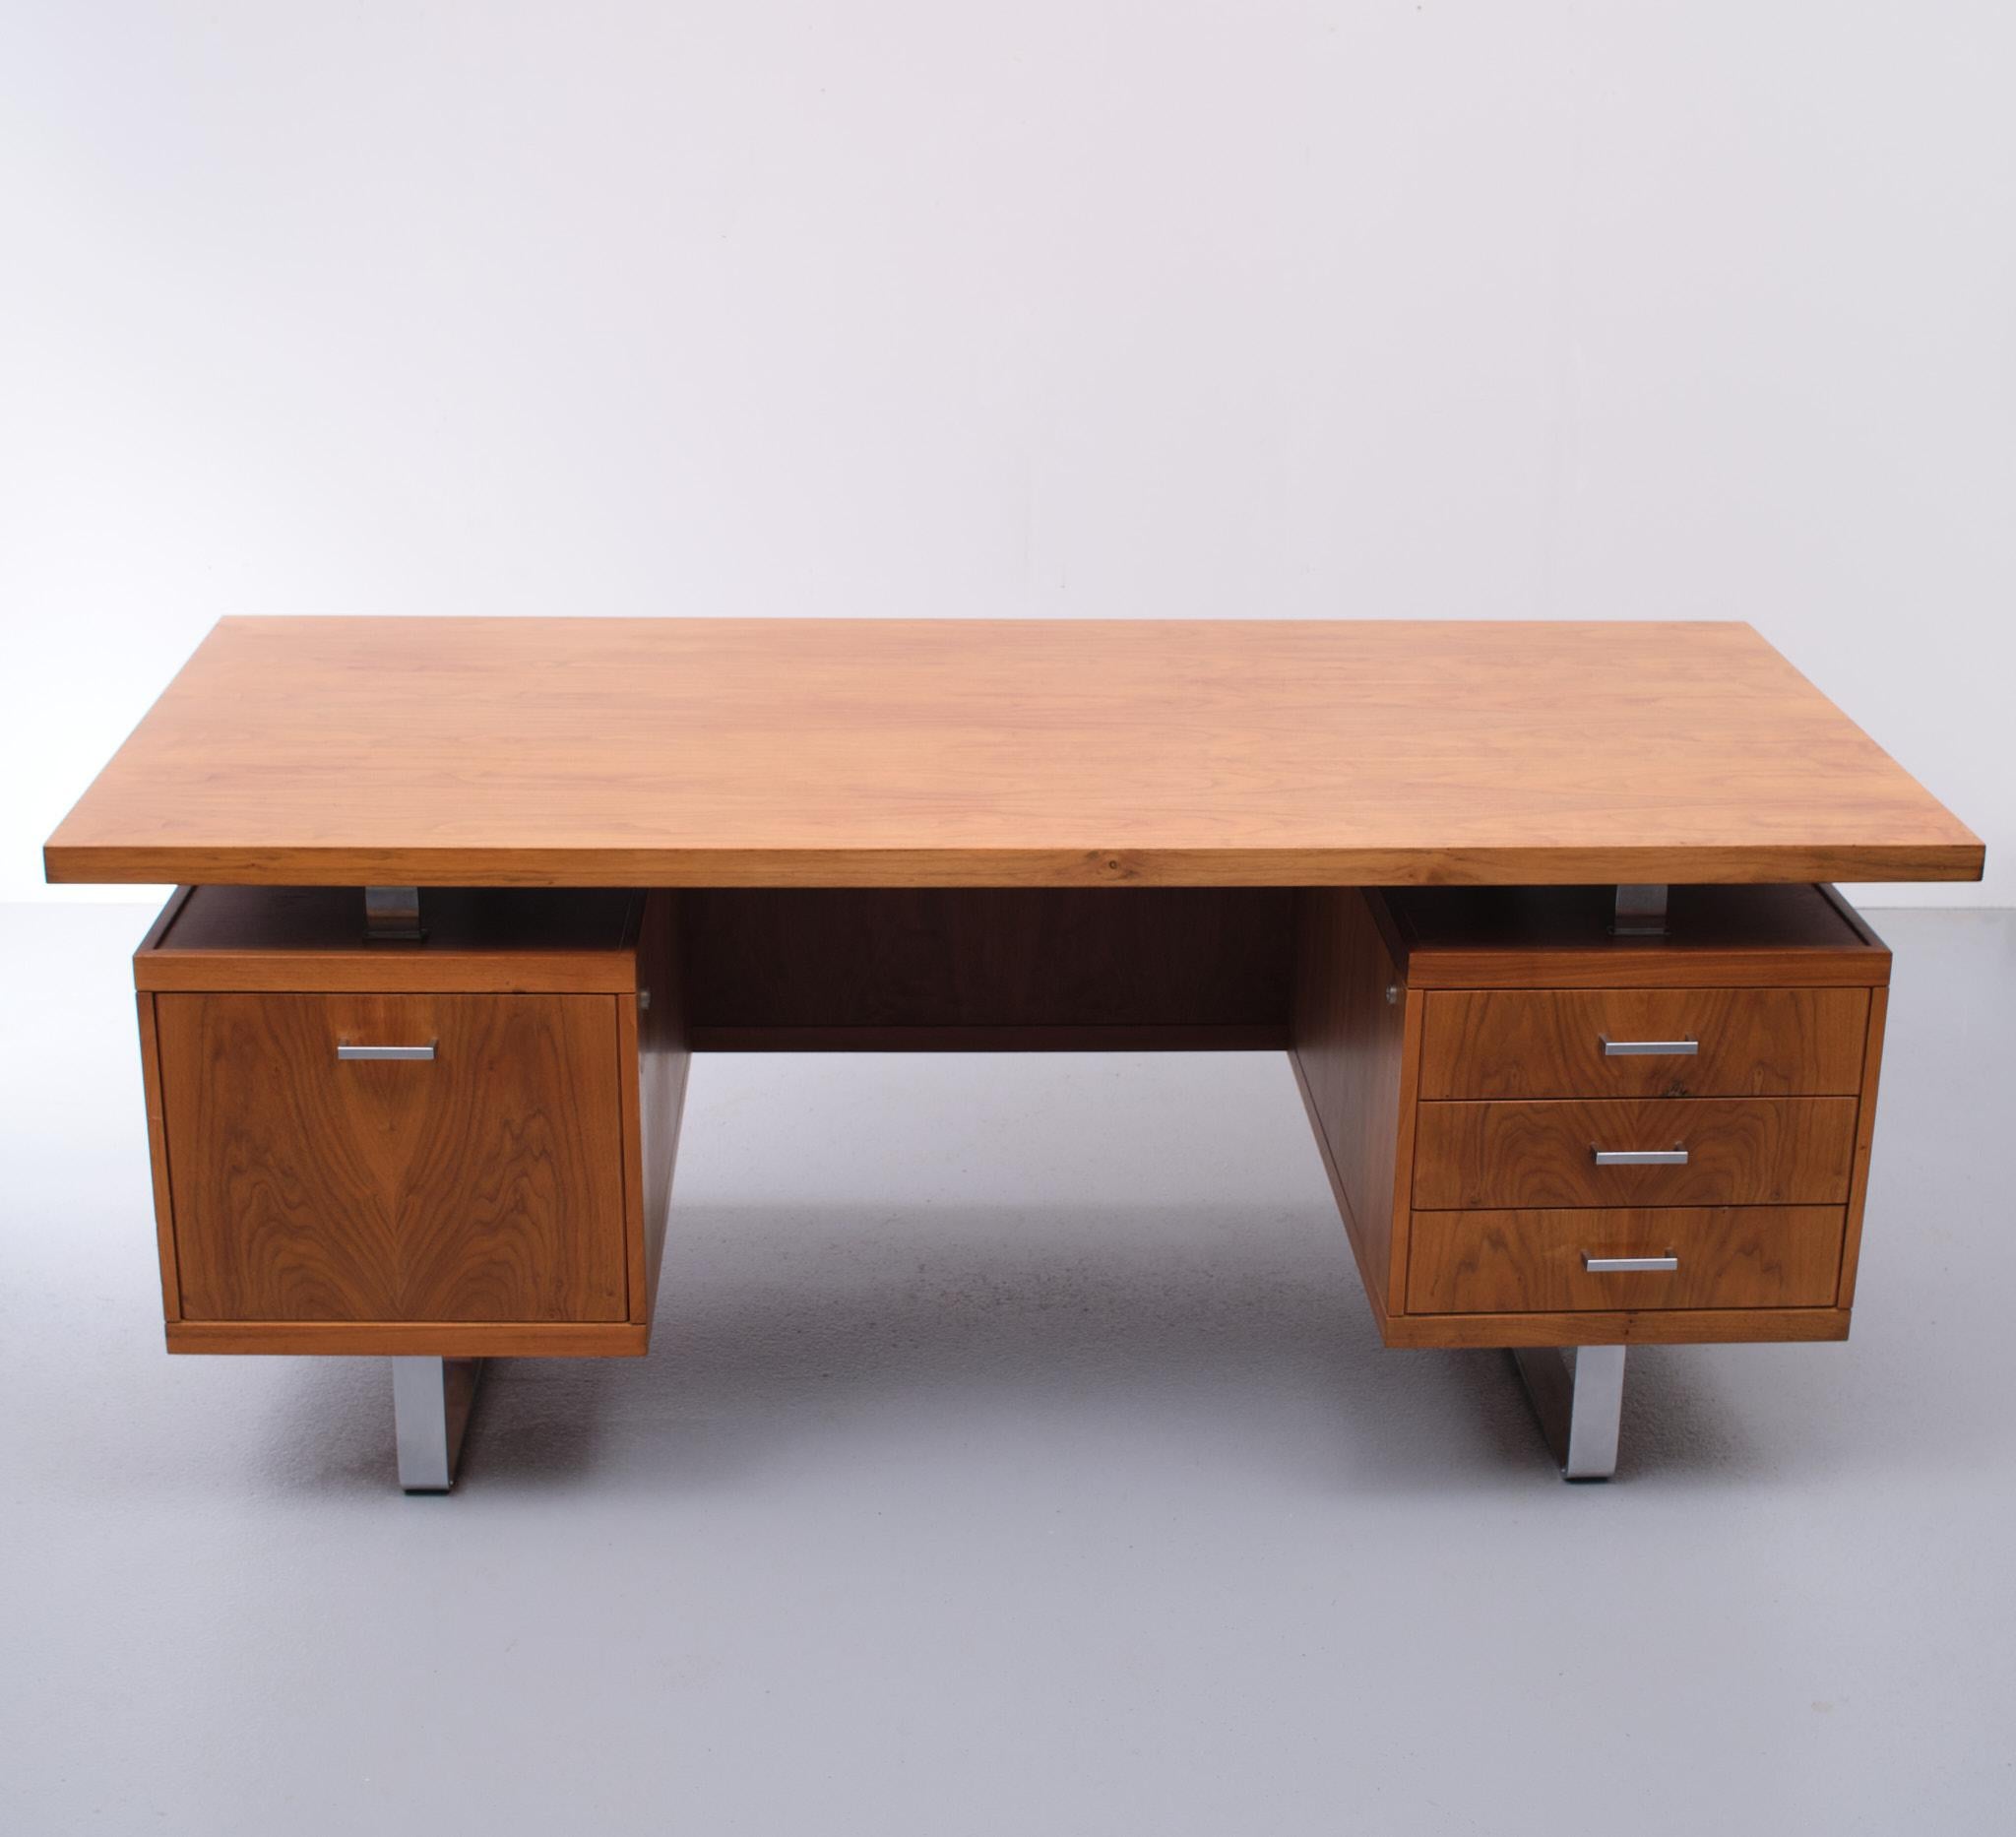 Beautiful executive office. Teak wood. Design Jórgen Pedersen for E Pedersen & Son a/s Denmark 1960s
Chrome handles and legs. Heavy and large desk. Very nice grain in the teak.
 